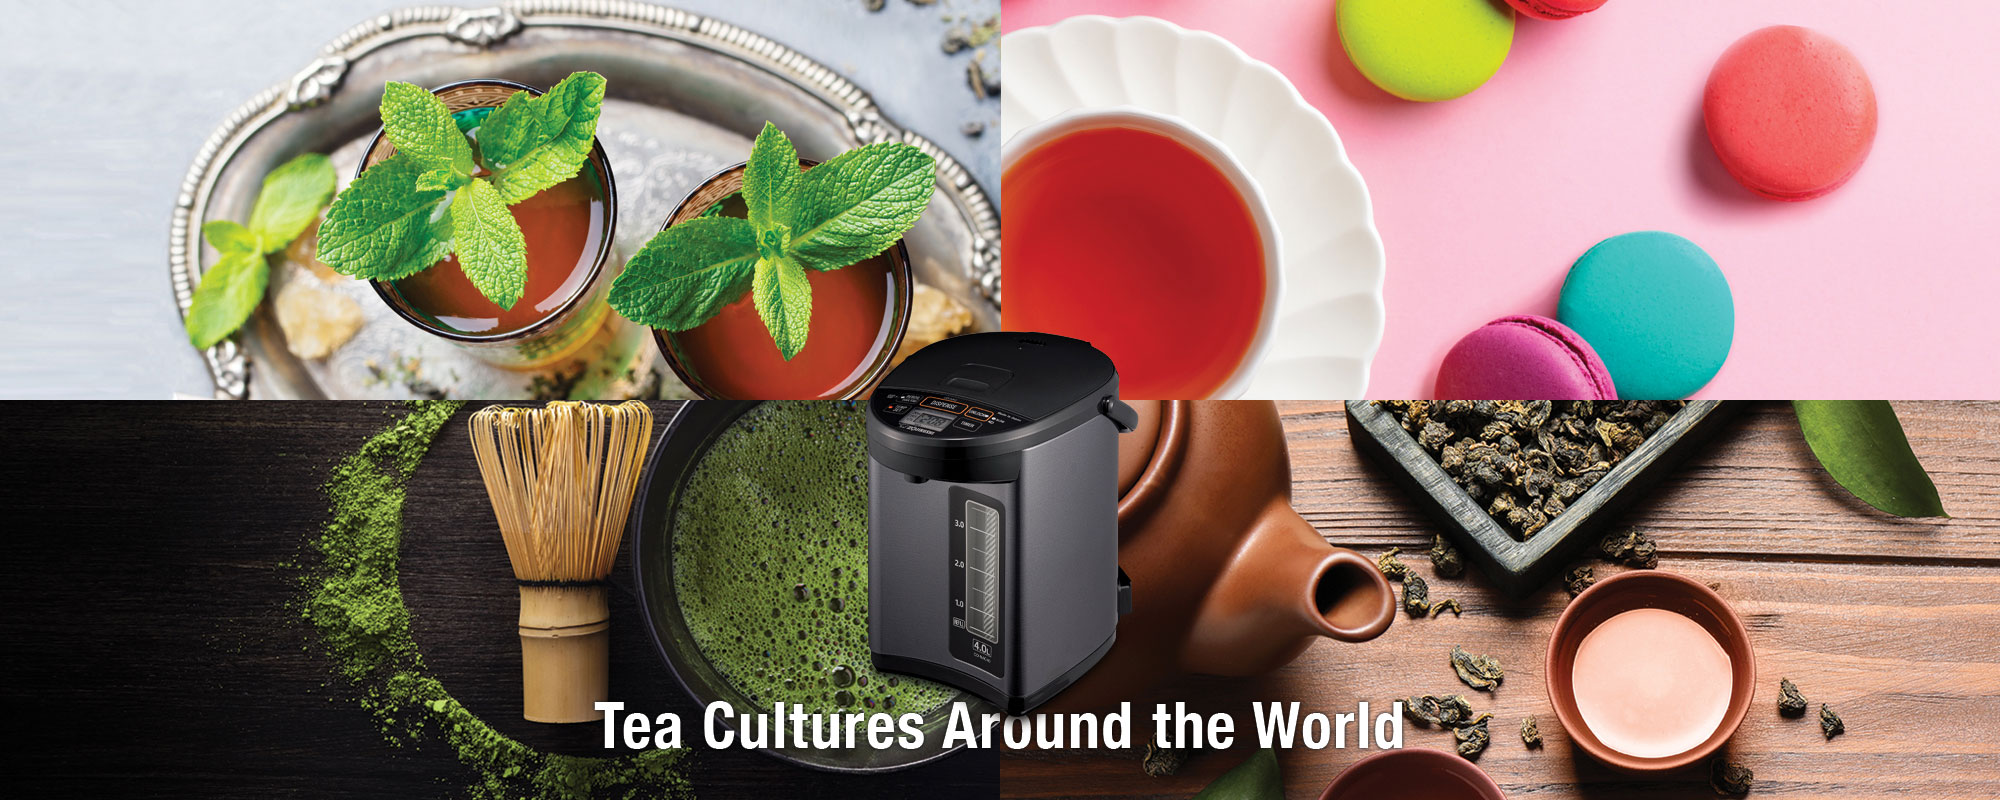 Tea Cultures Around the World